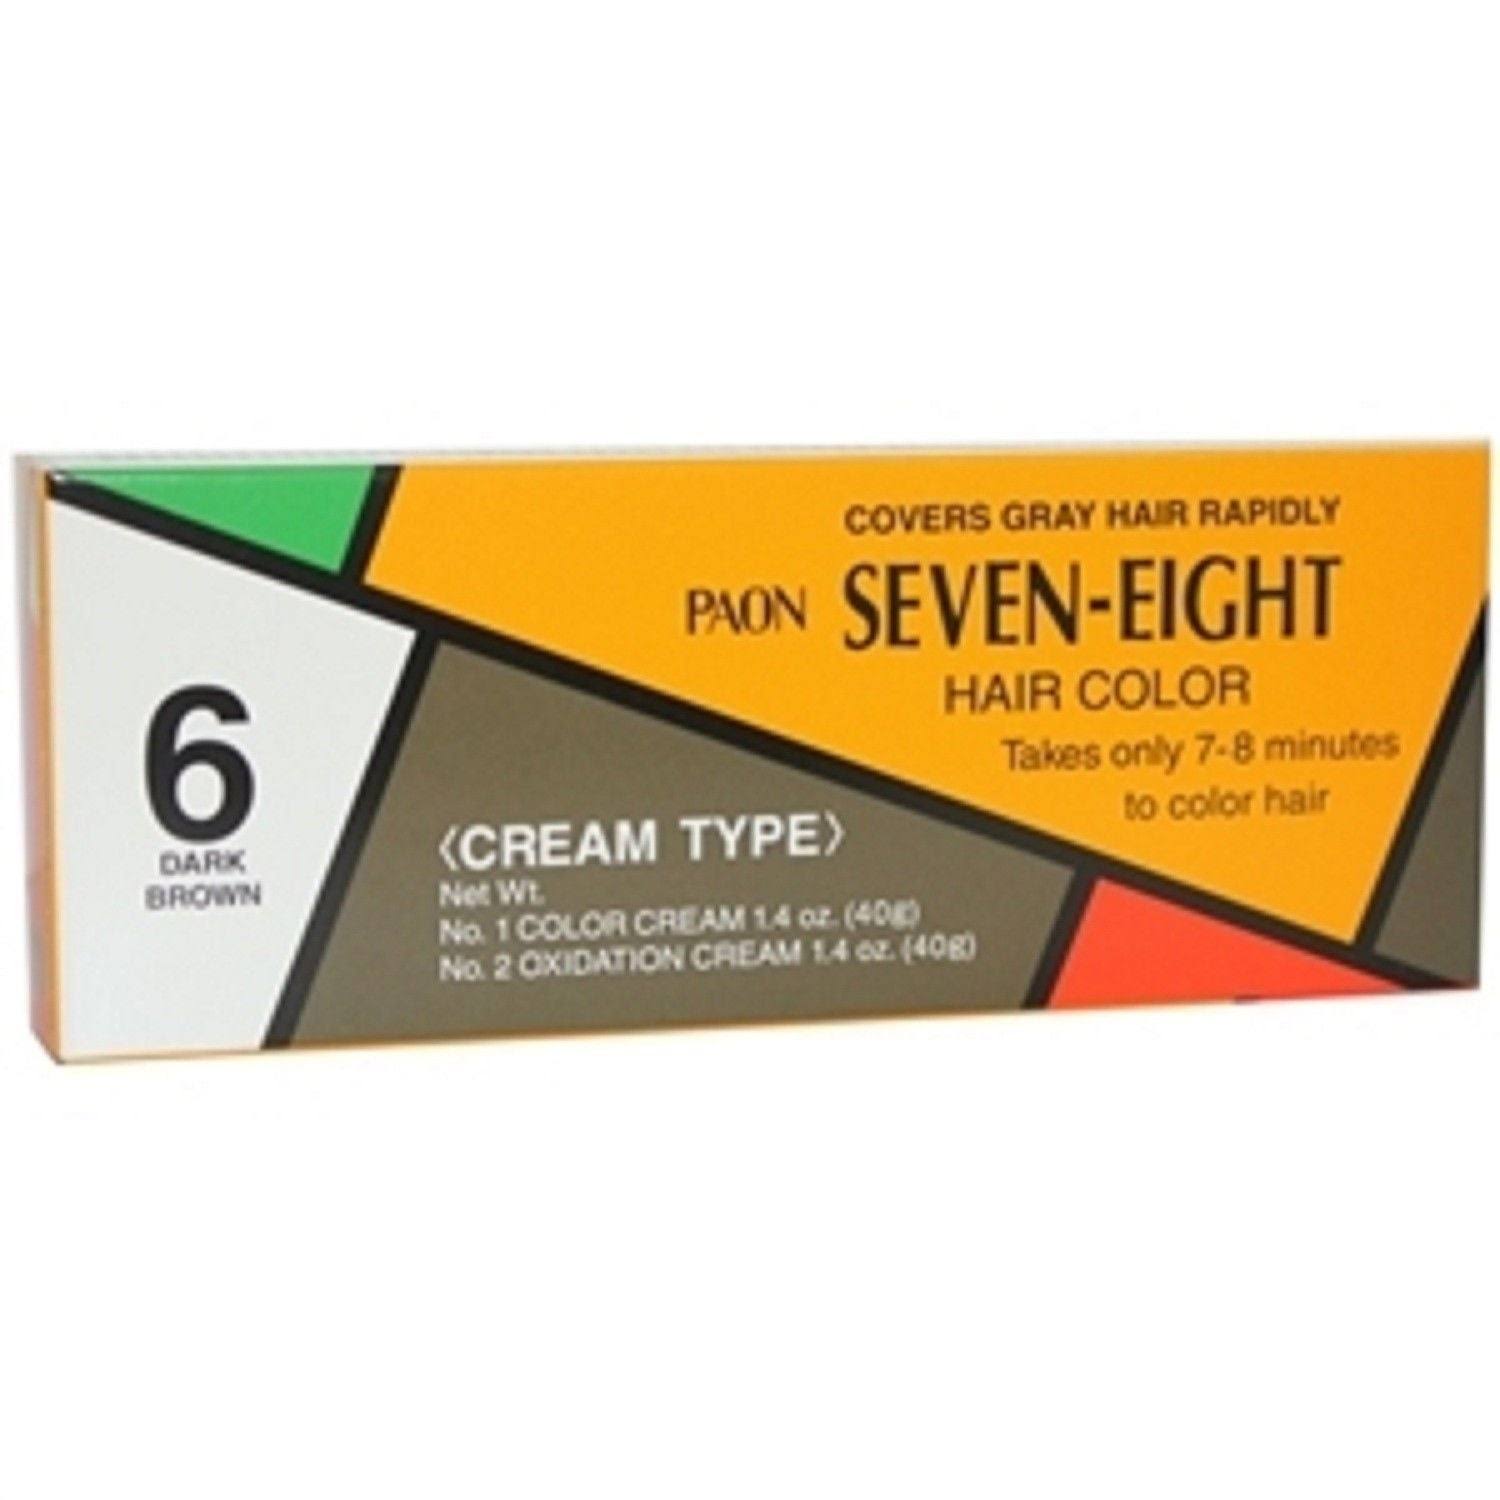 Paon Seven Eight Hair Color - 6 Dark Brown